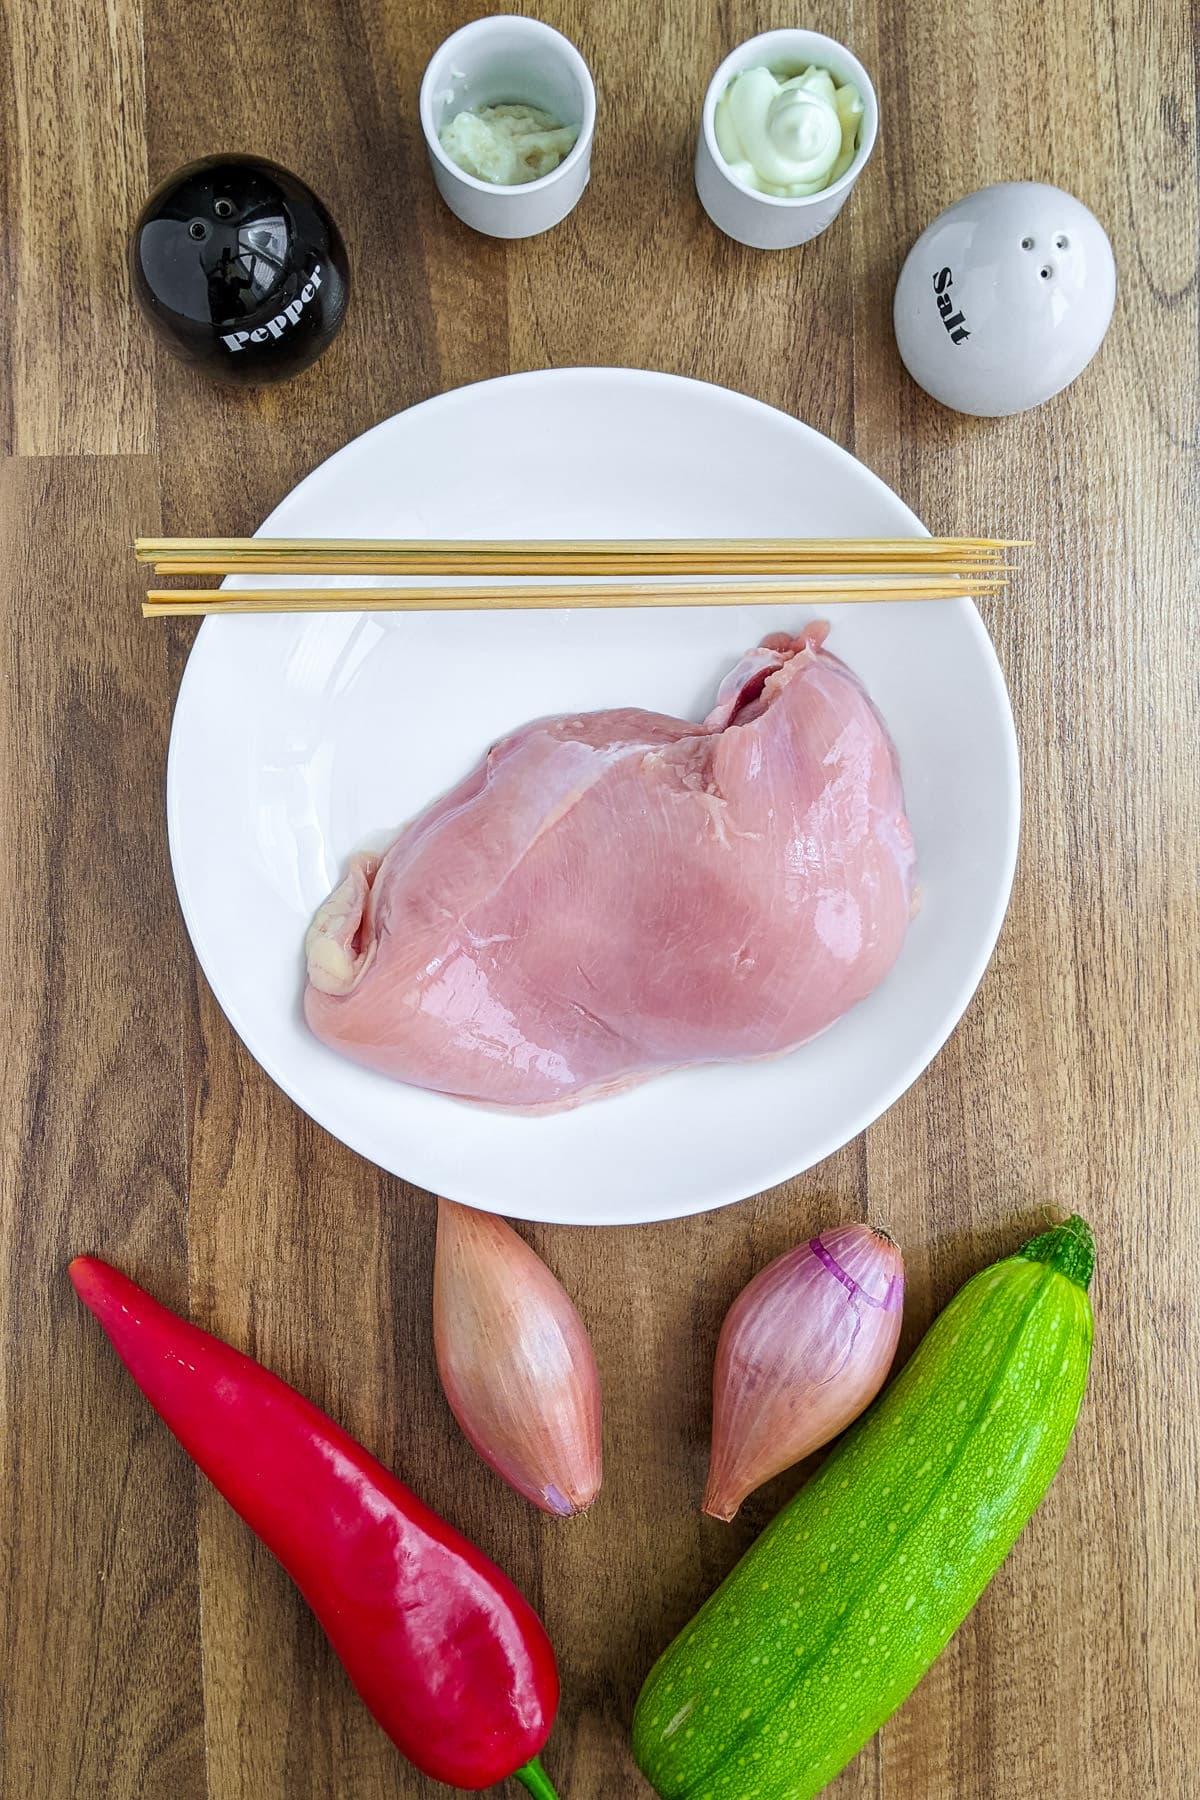 Top view of prepared ingredients for the chicken skewers.